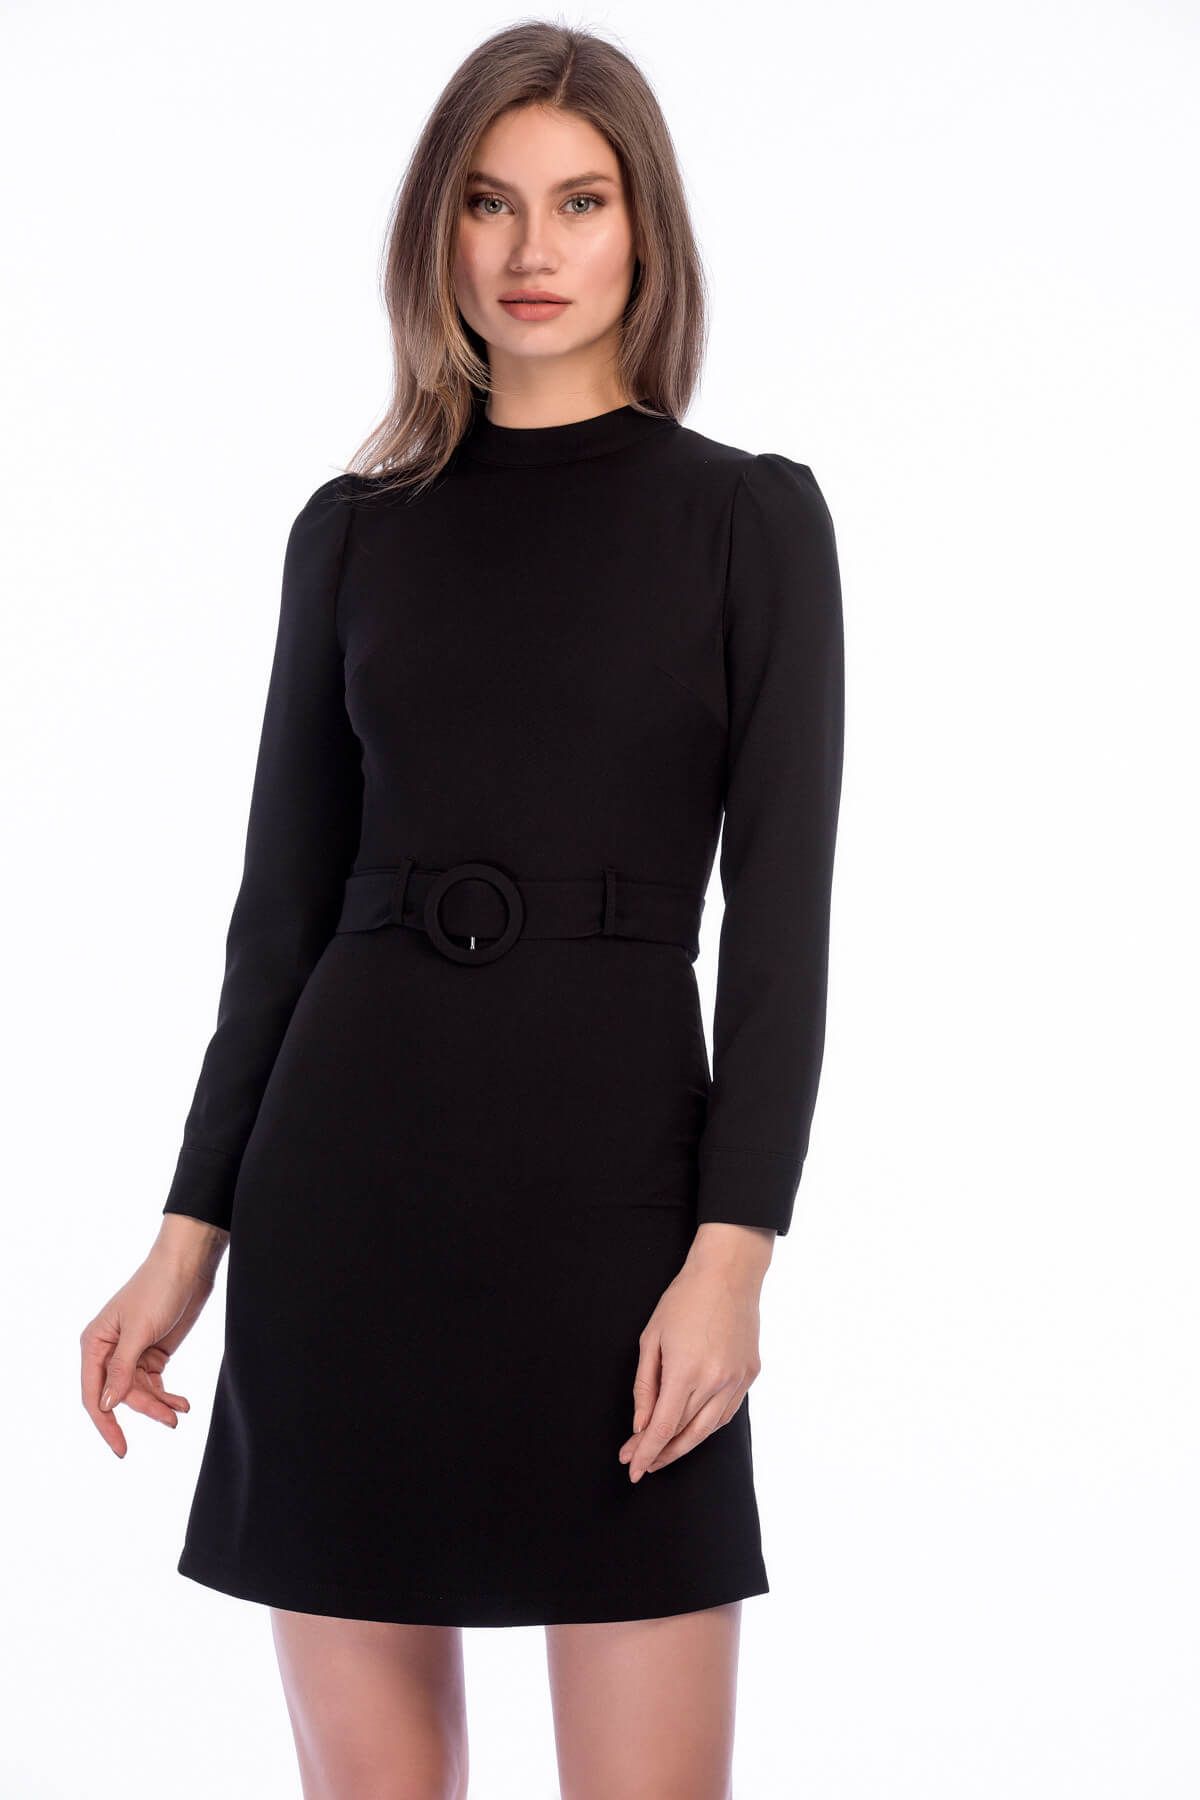 İroni Kadın Siyah Kemerli Mini Elbise 5222-891